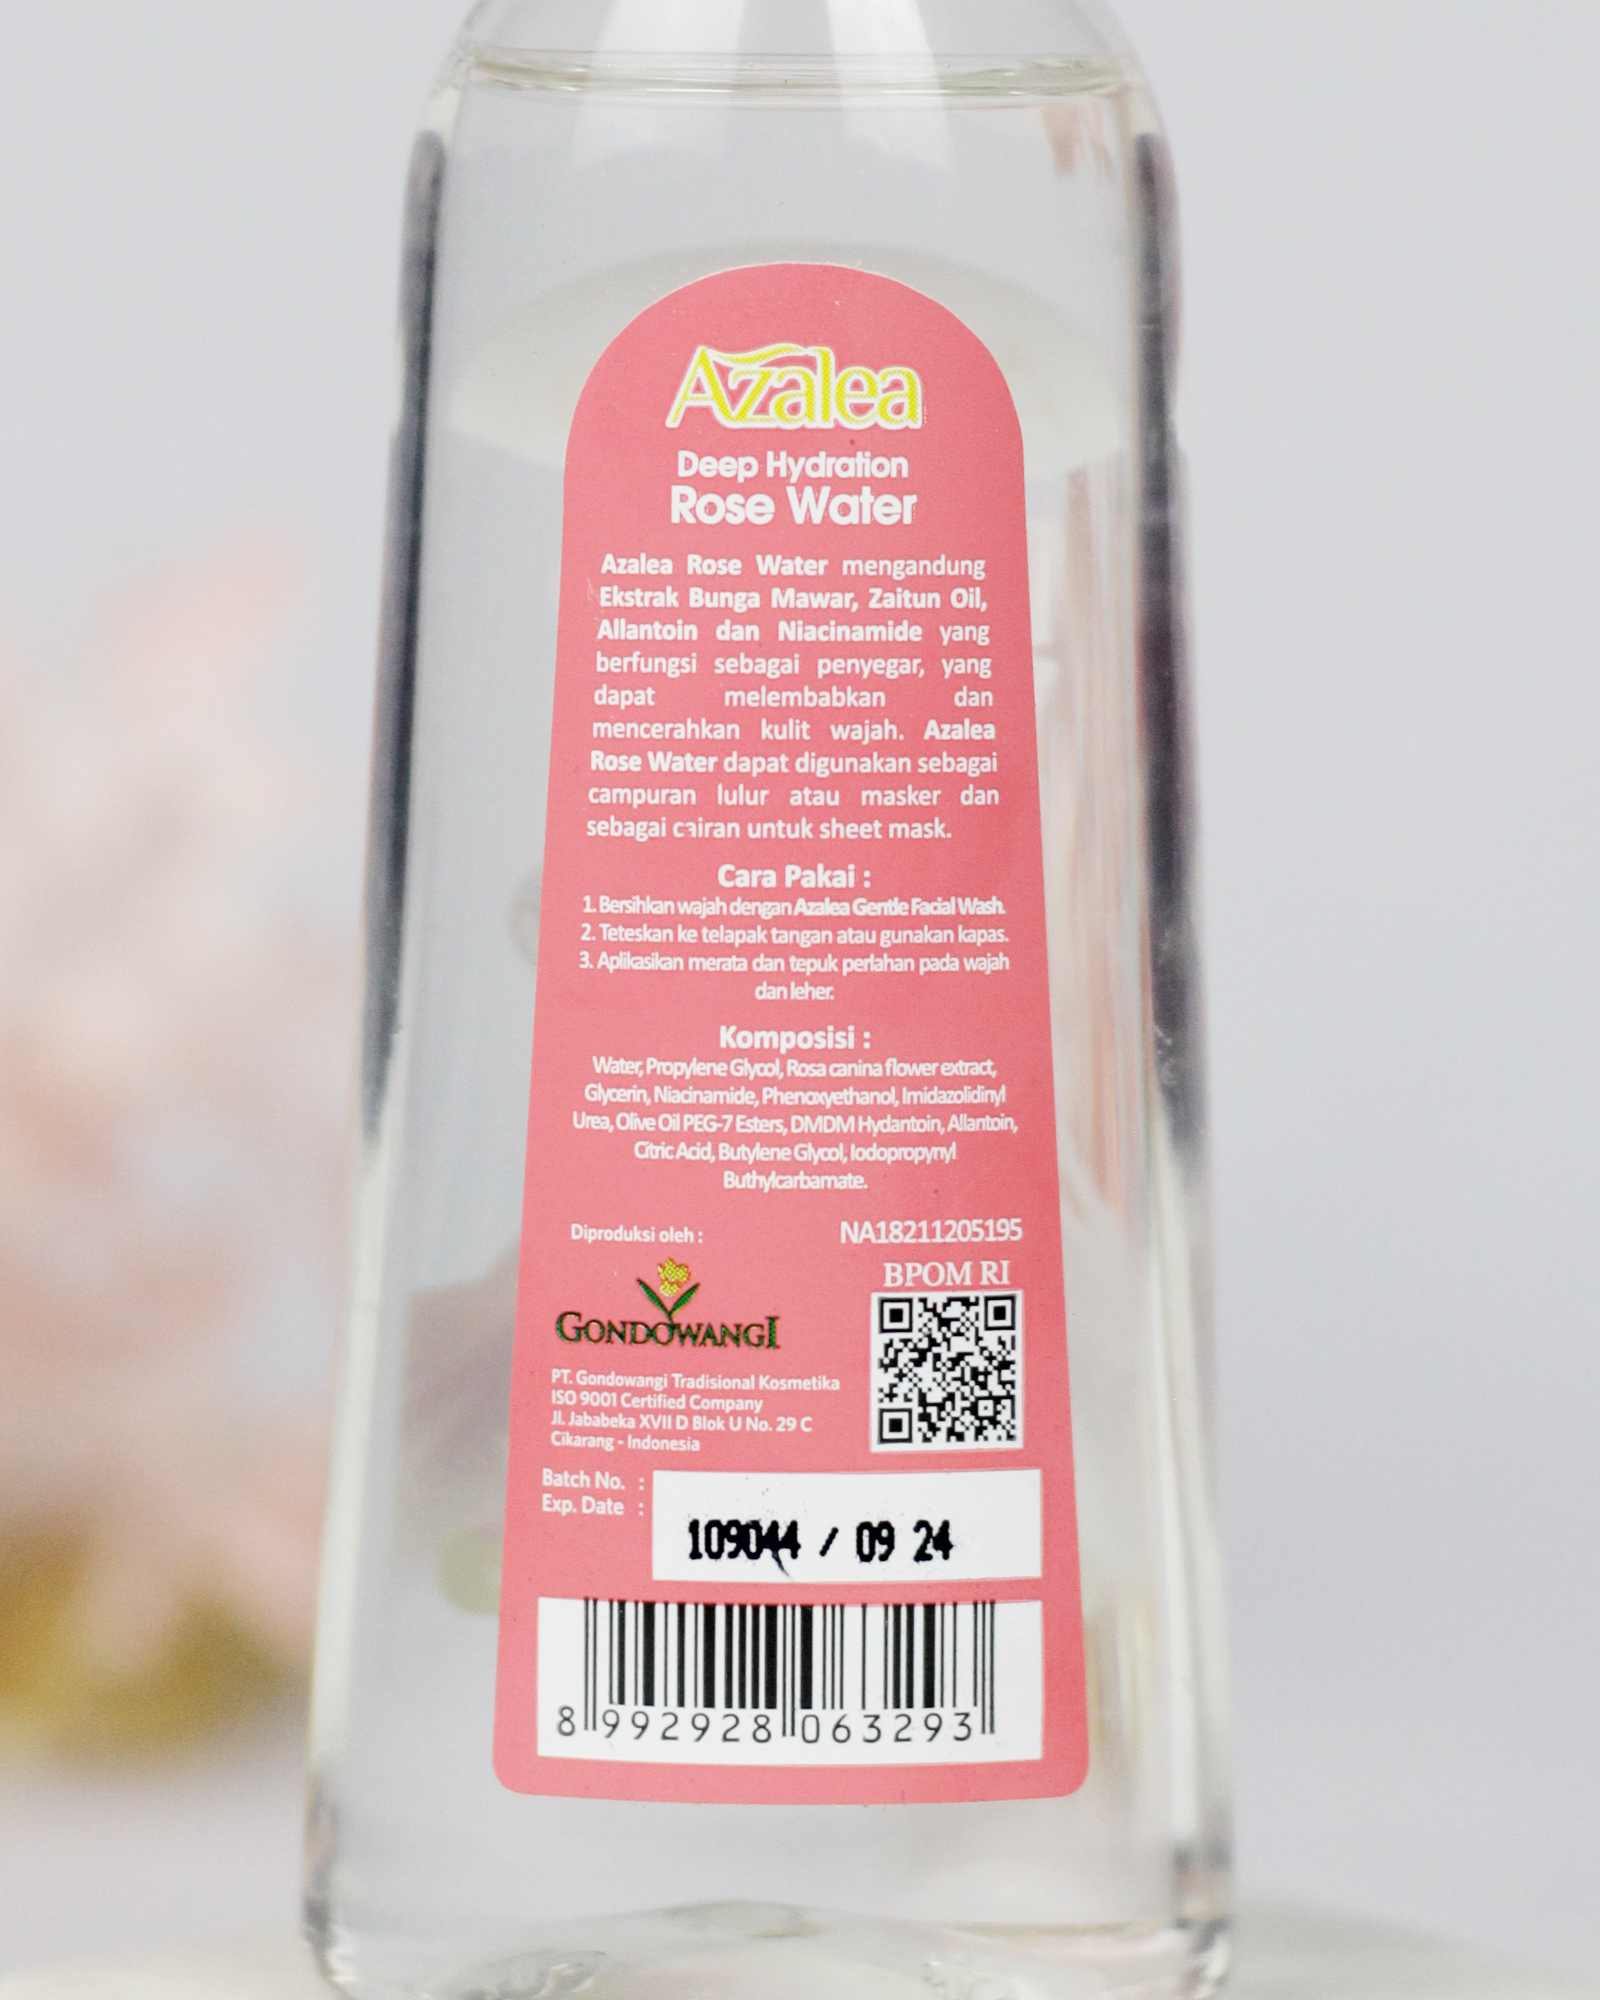 Azalea Deep Hydration Rose Water